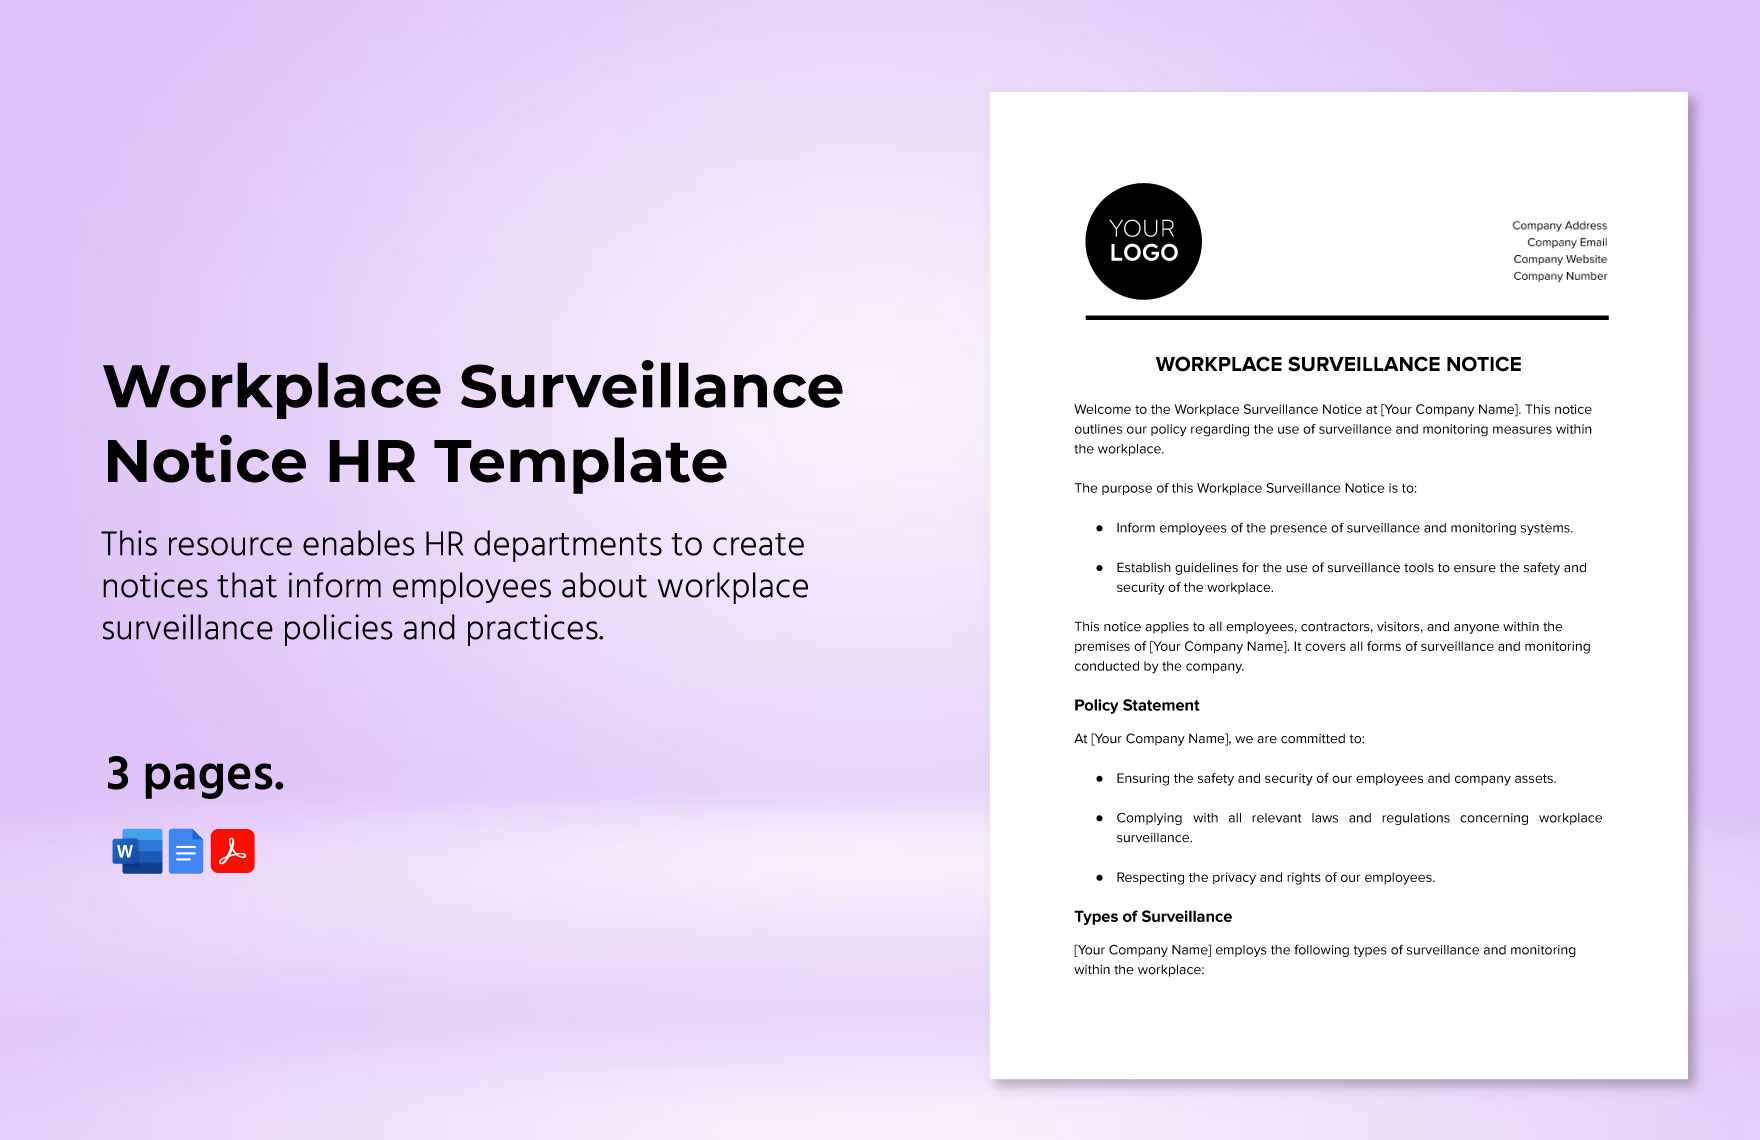 Workplace Surveillance Notice HR Template in Word, Google Docs, PDF